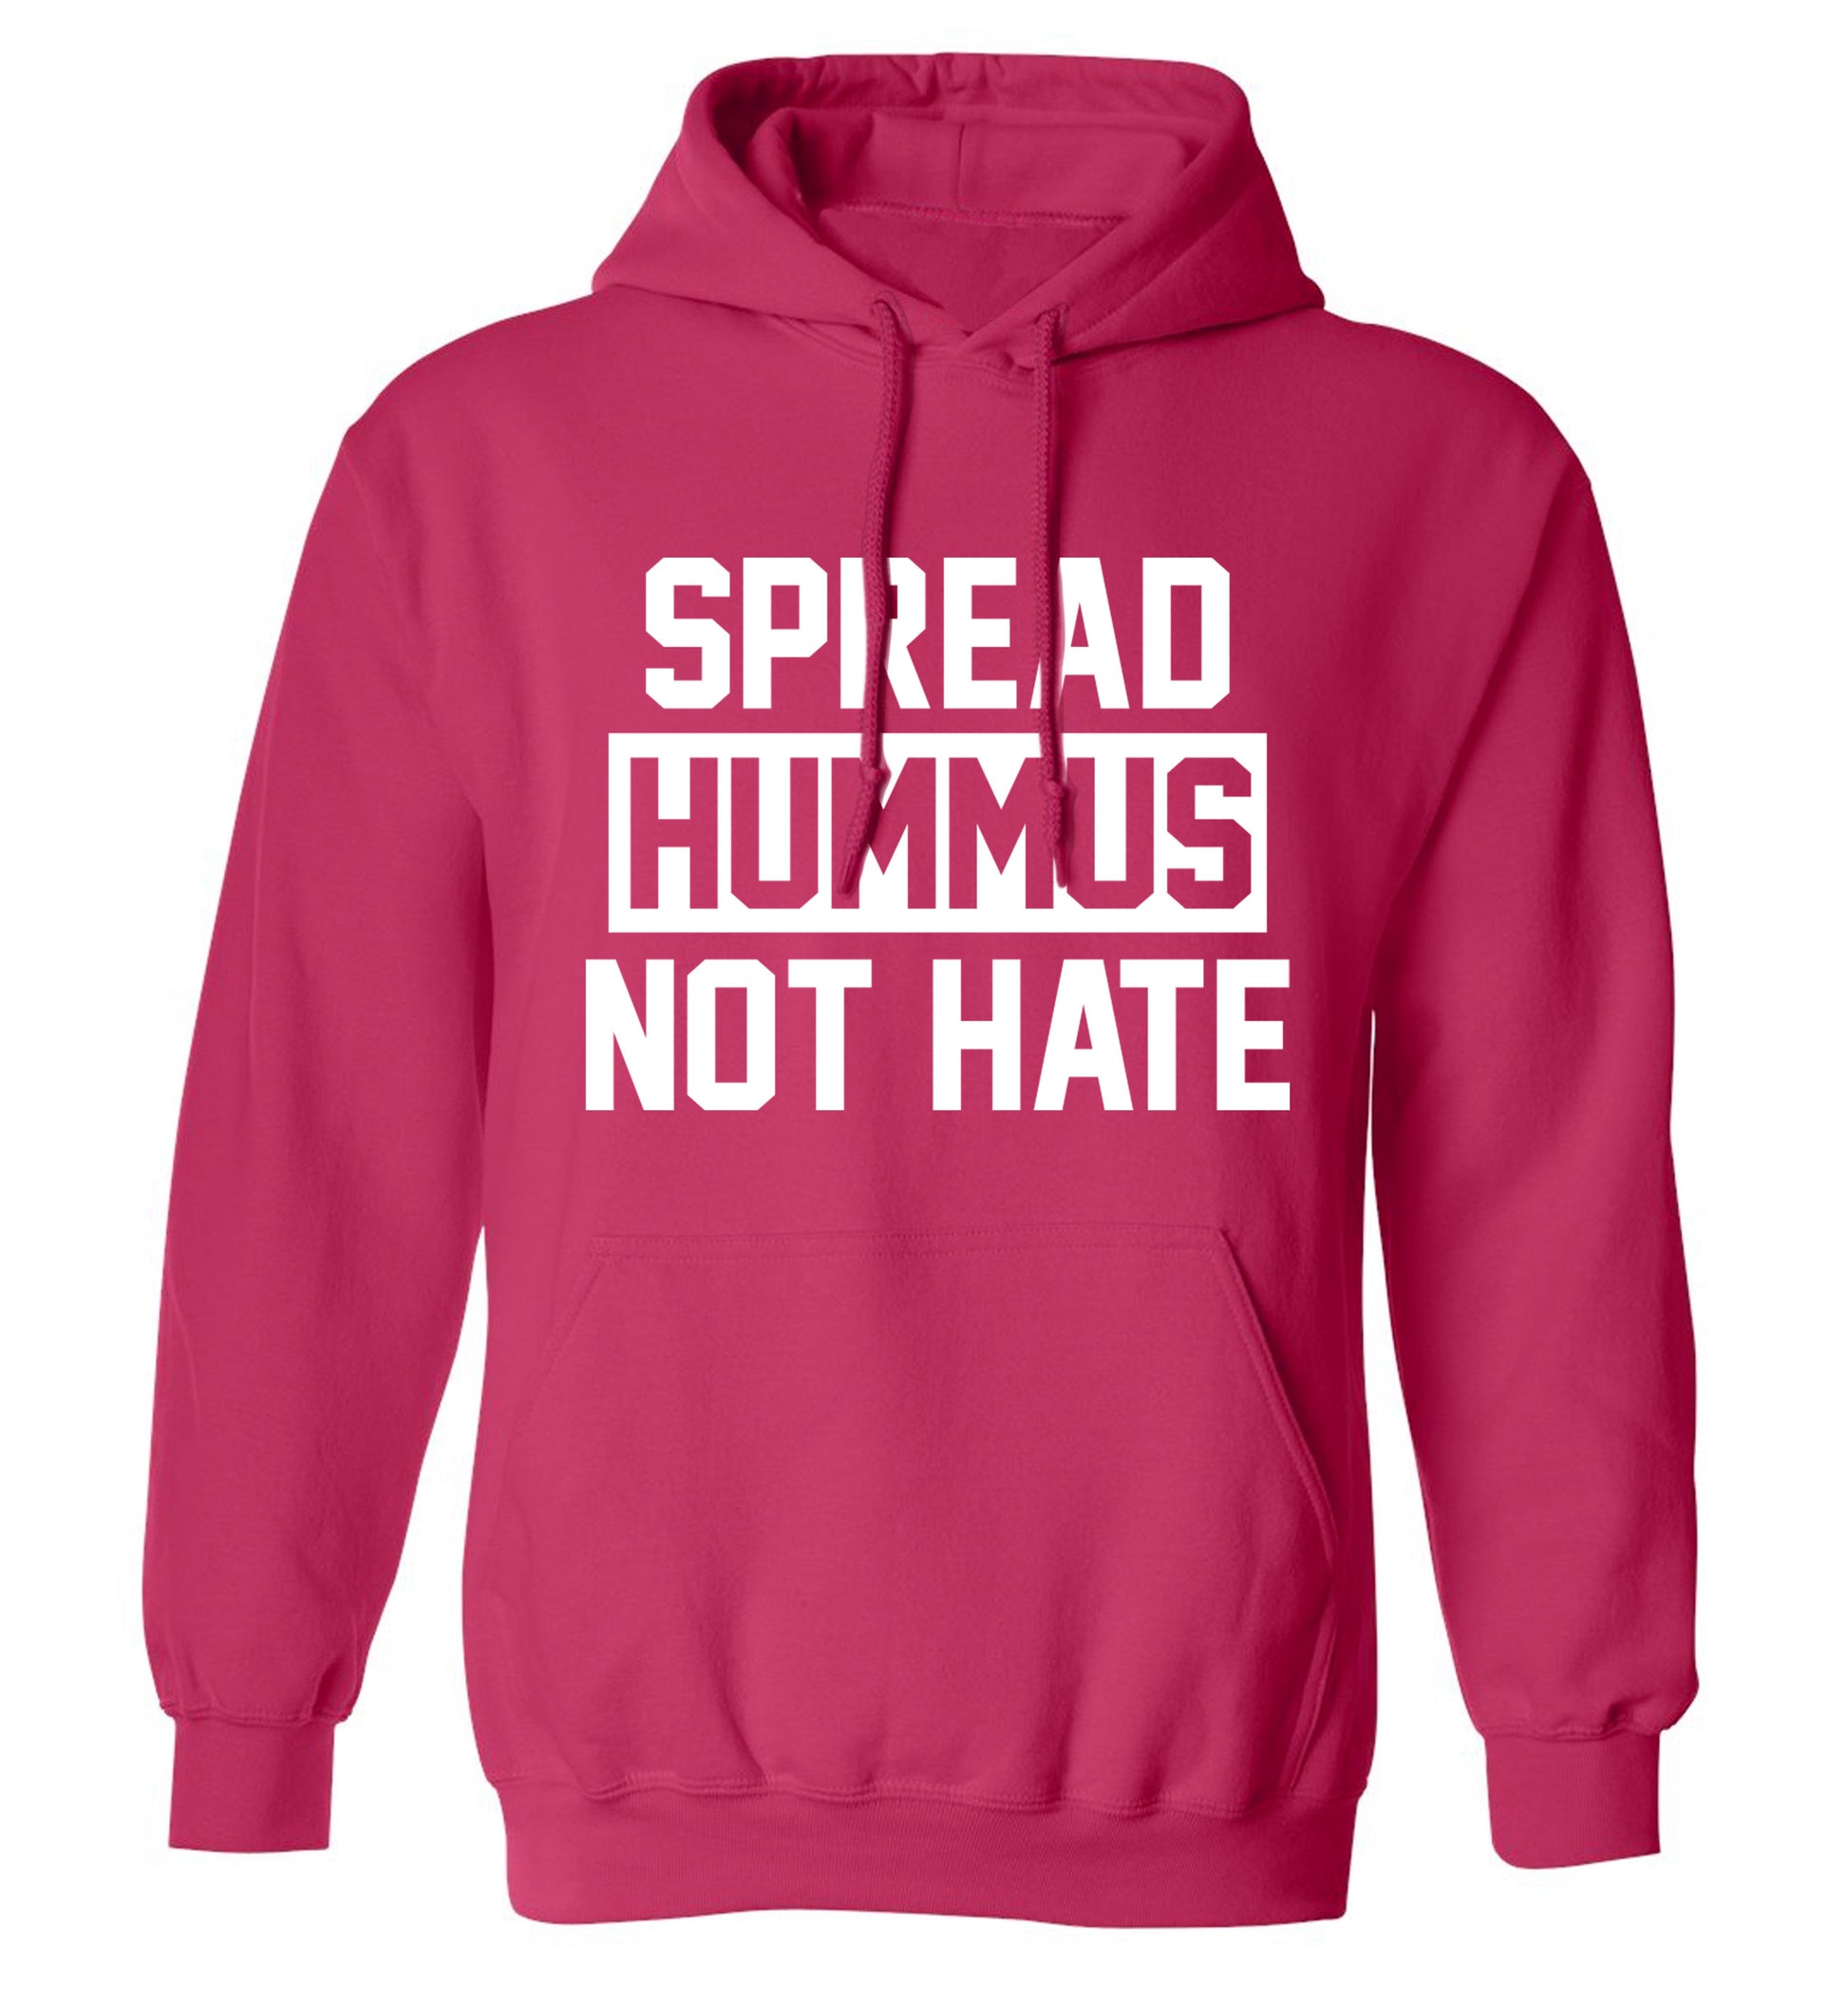 Spread hummus not hate adults unisex pink hoodie 2XL